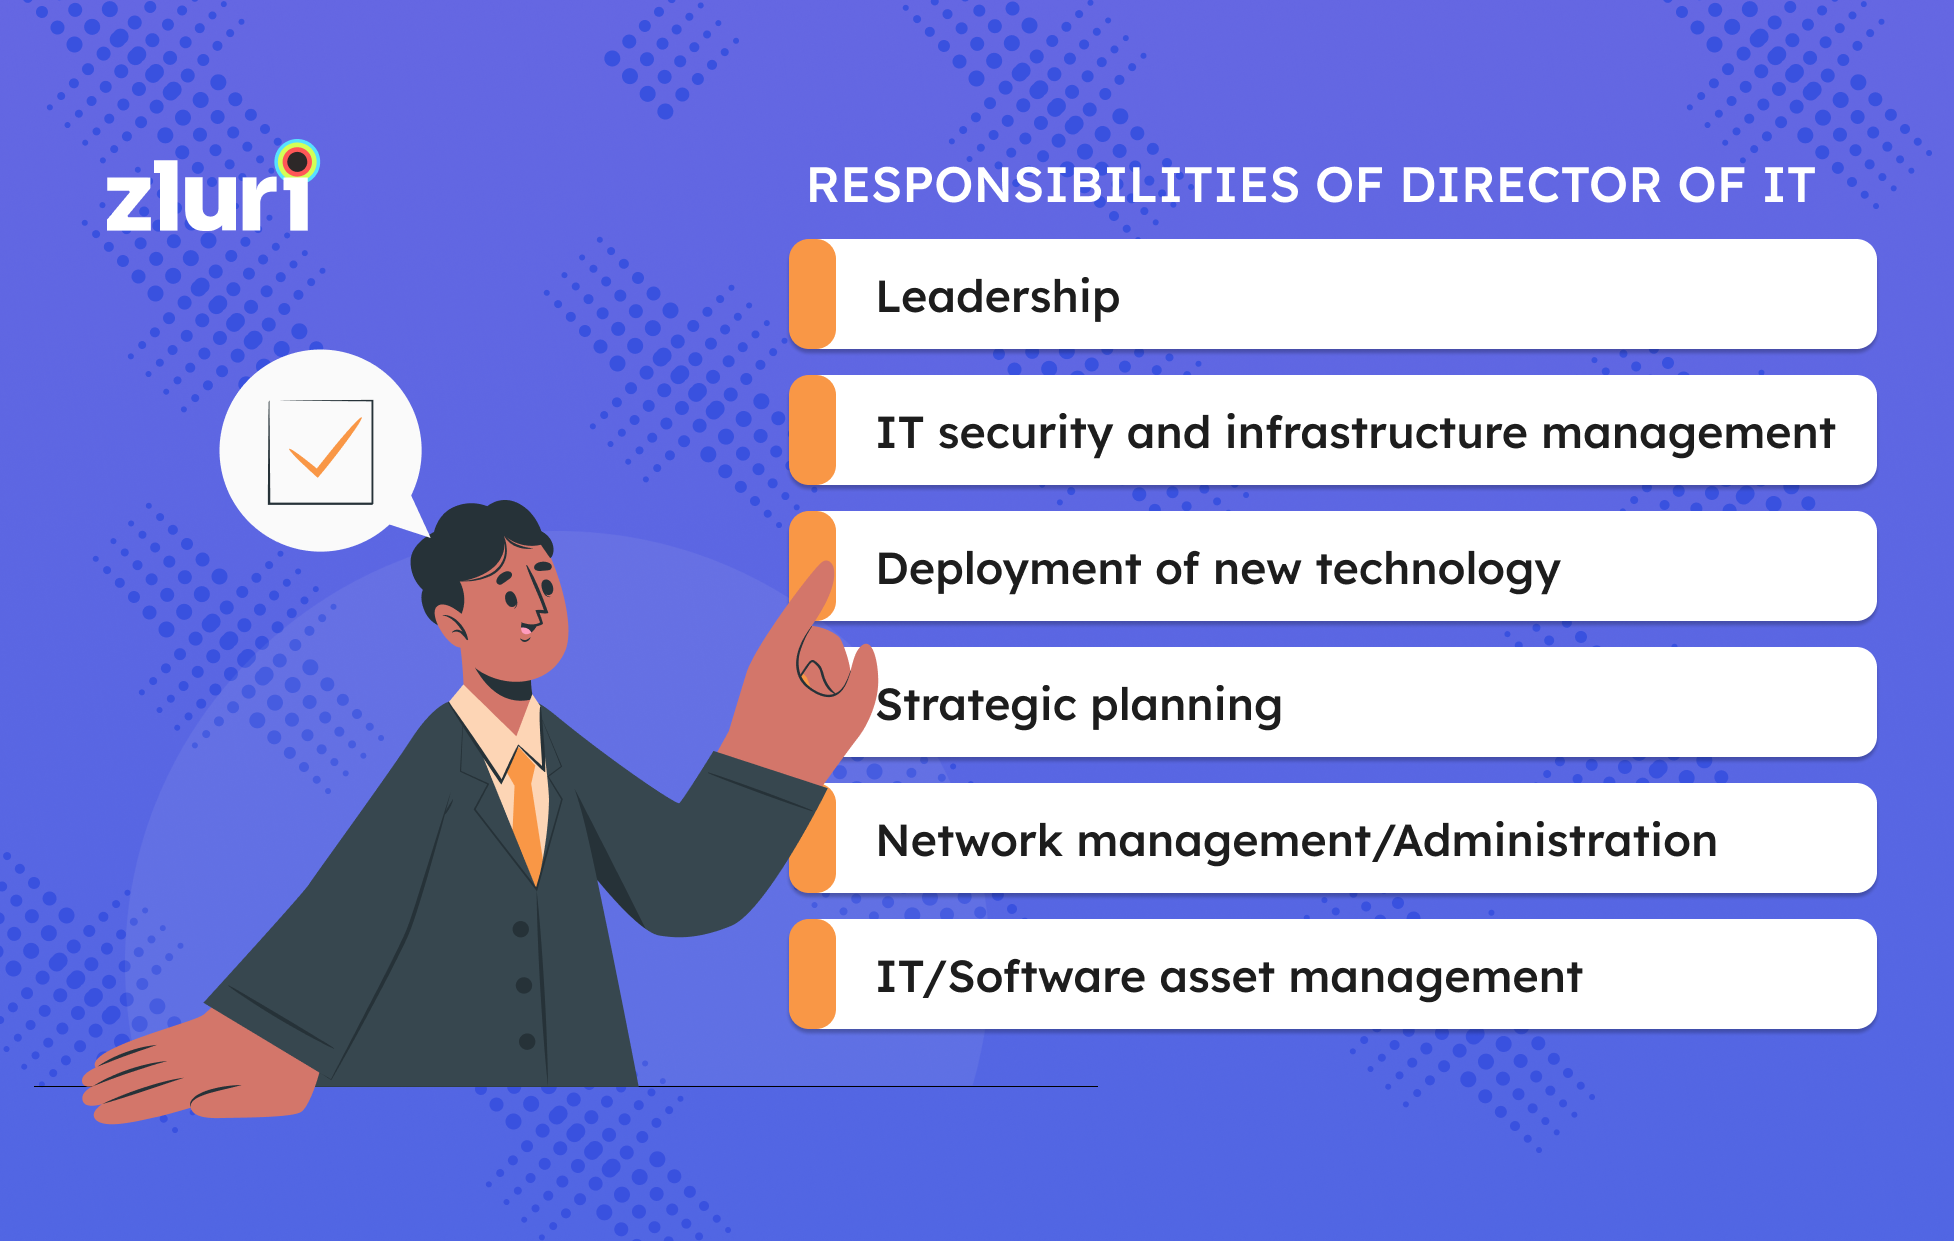 Responsibilities of Director of IT